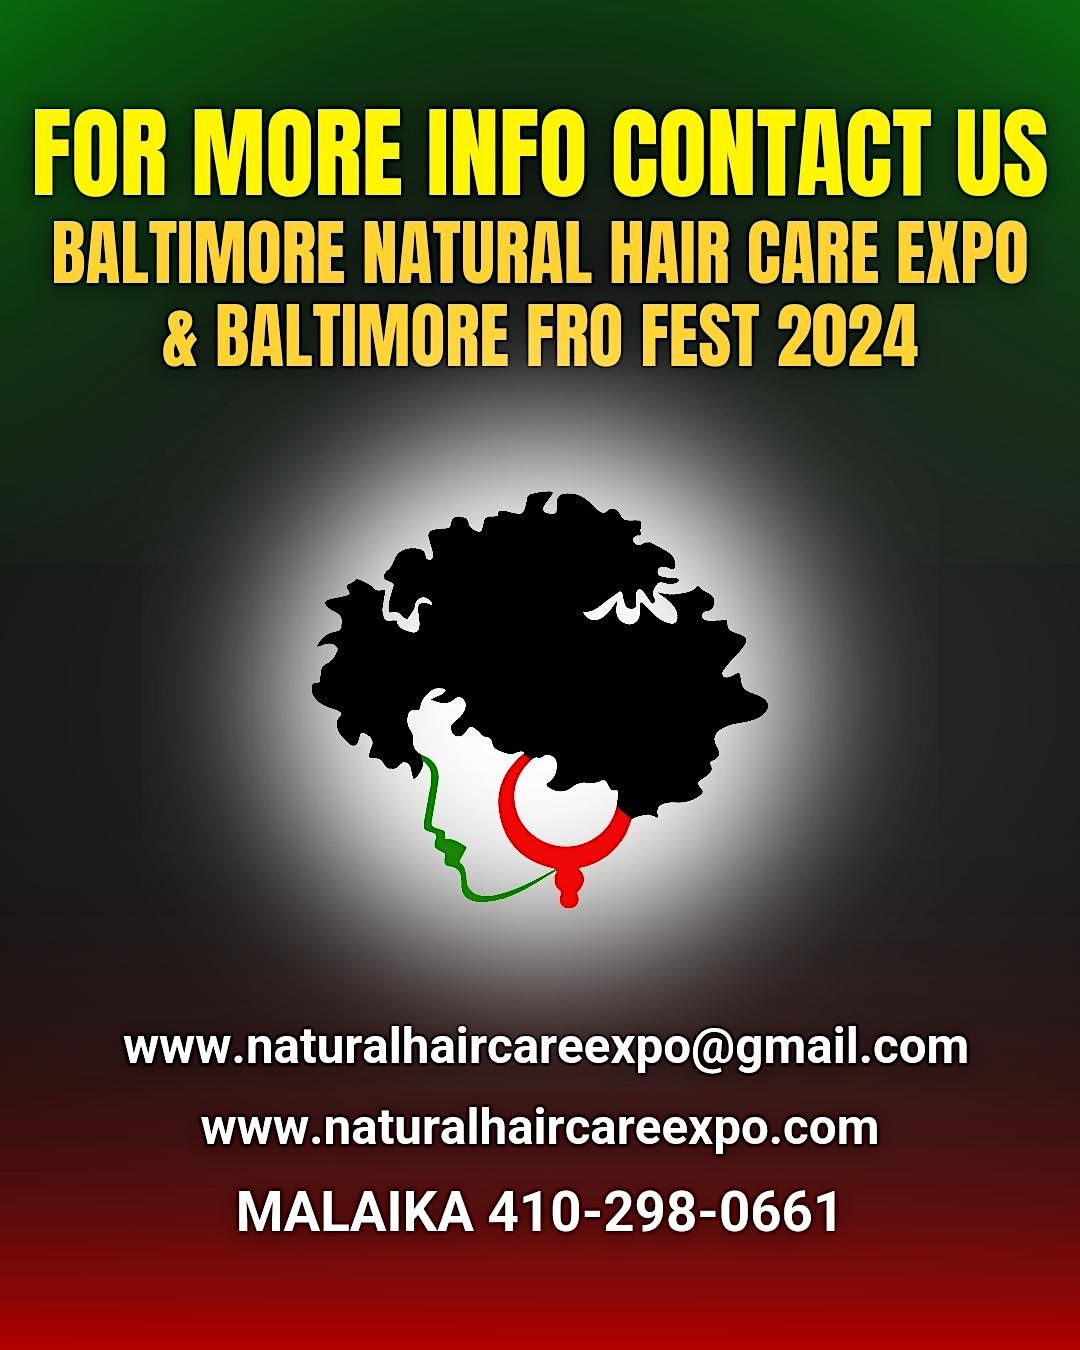 Baltimore Natural Hair Care Expo  is seeking Vendors